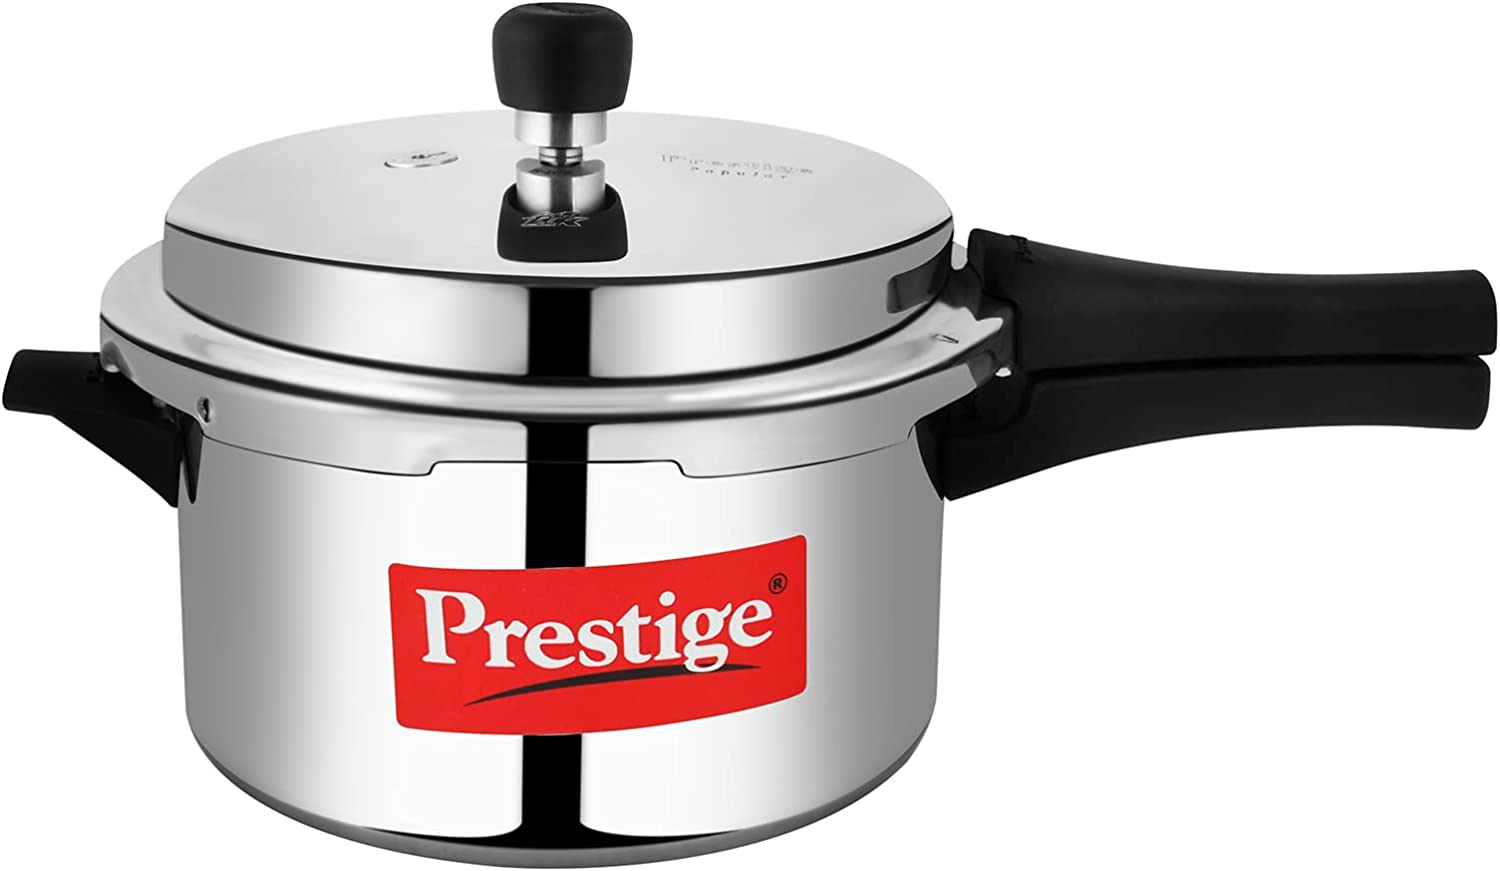 Prestige Stainless Steel Stovetop Pressure Cooker, 3-Liter